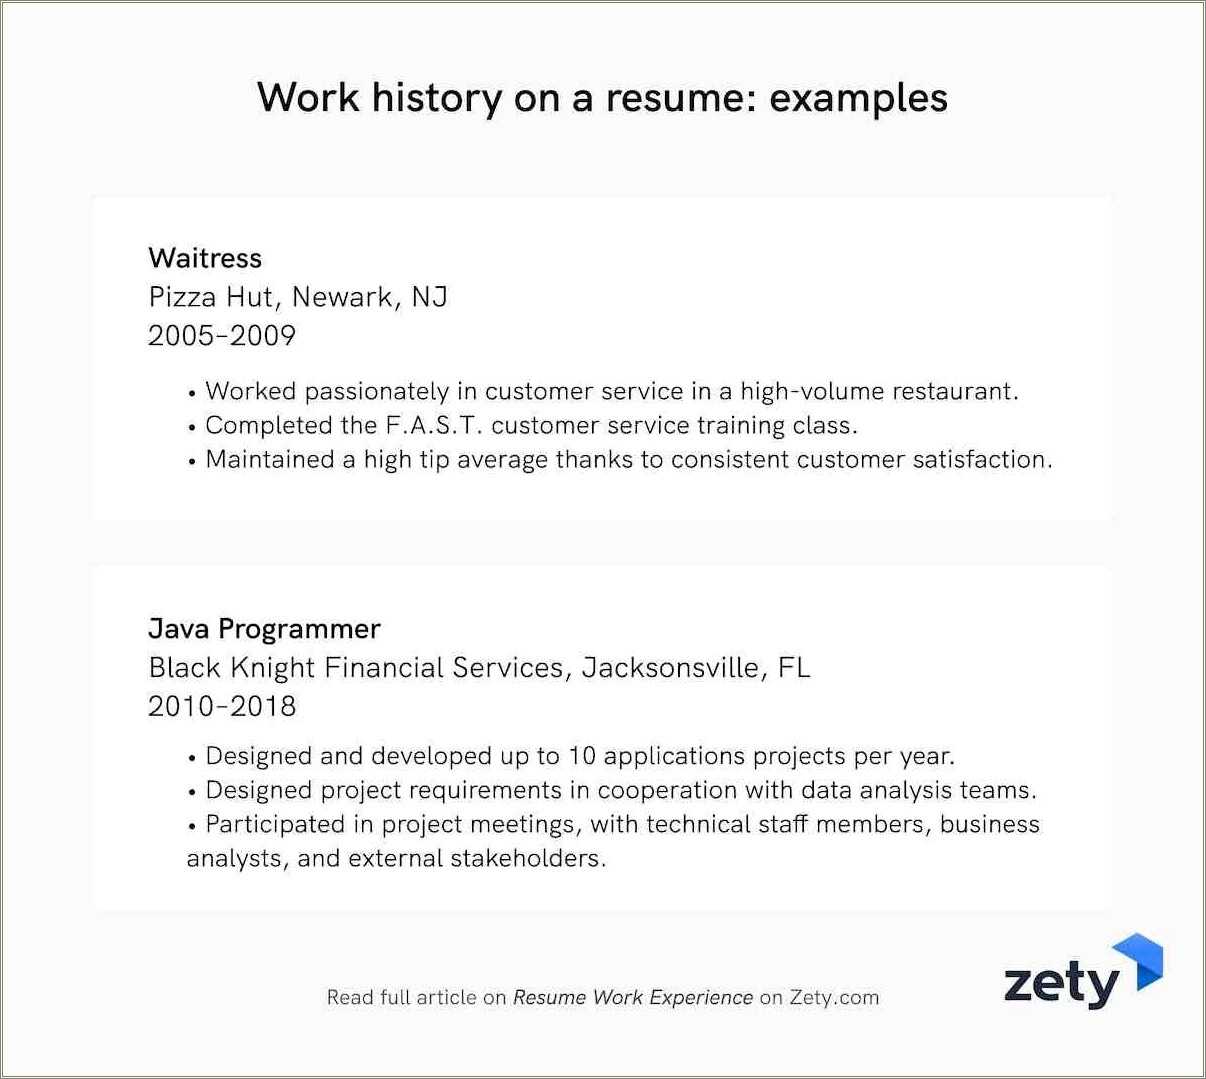 A Work History Summary Type Resume